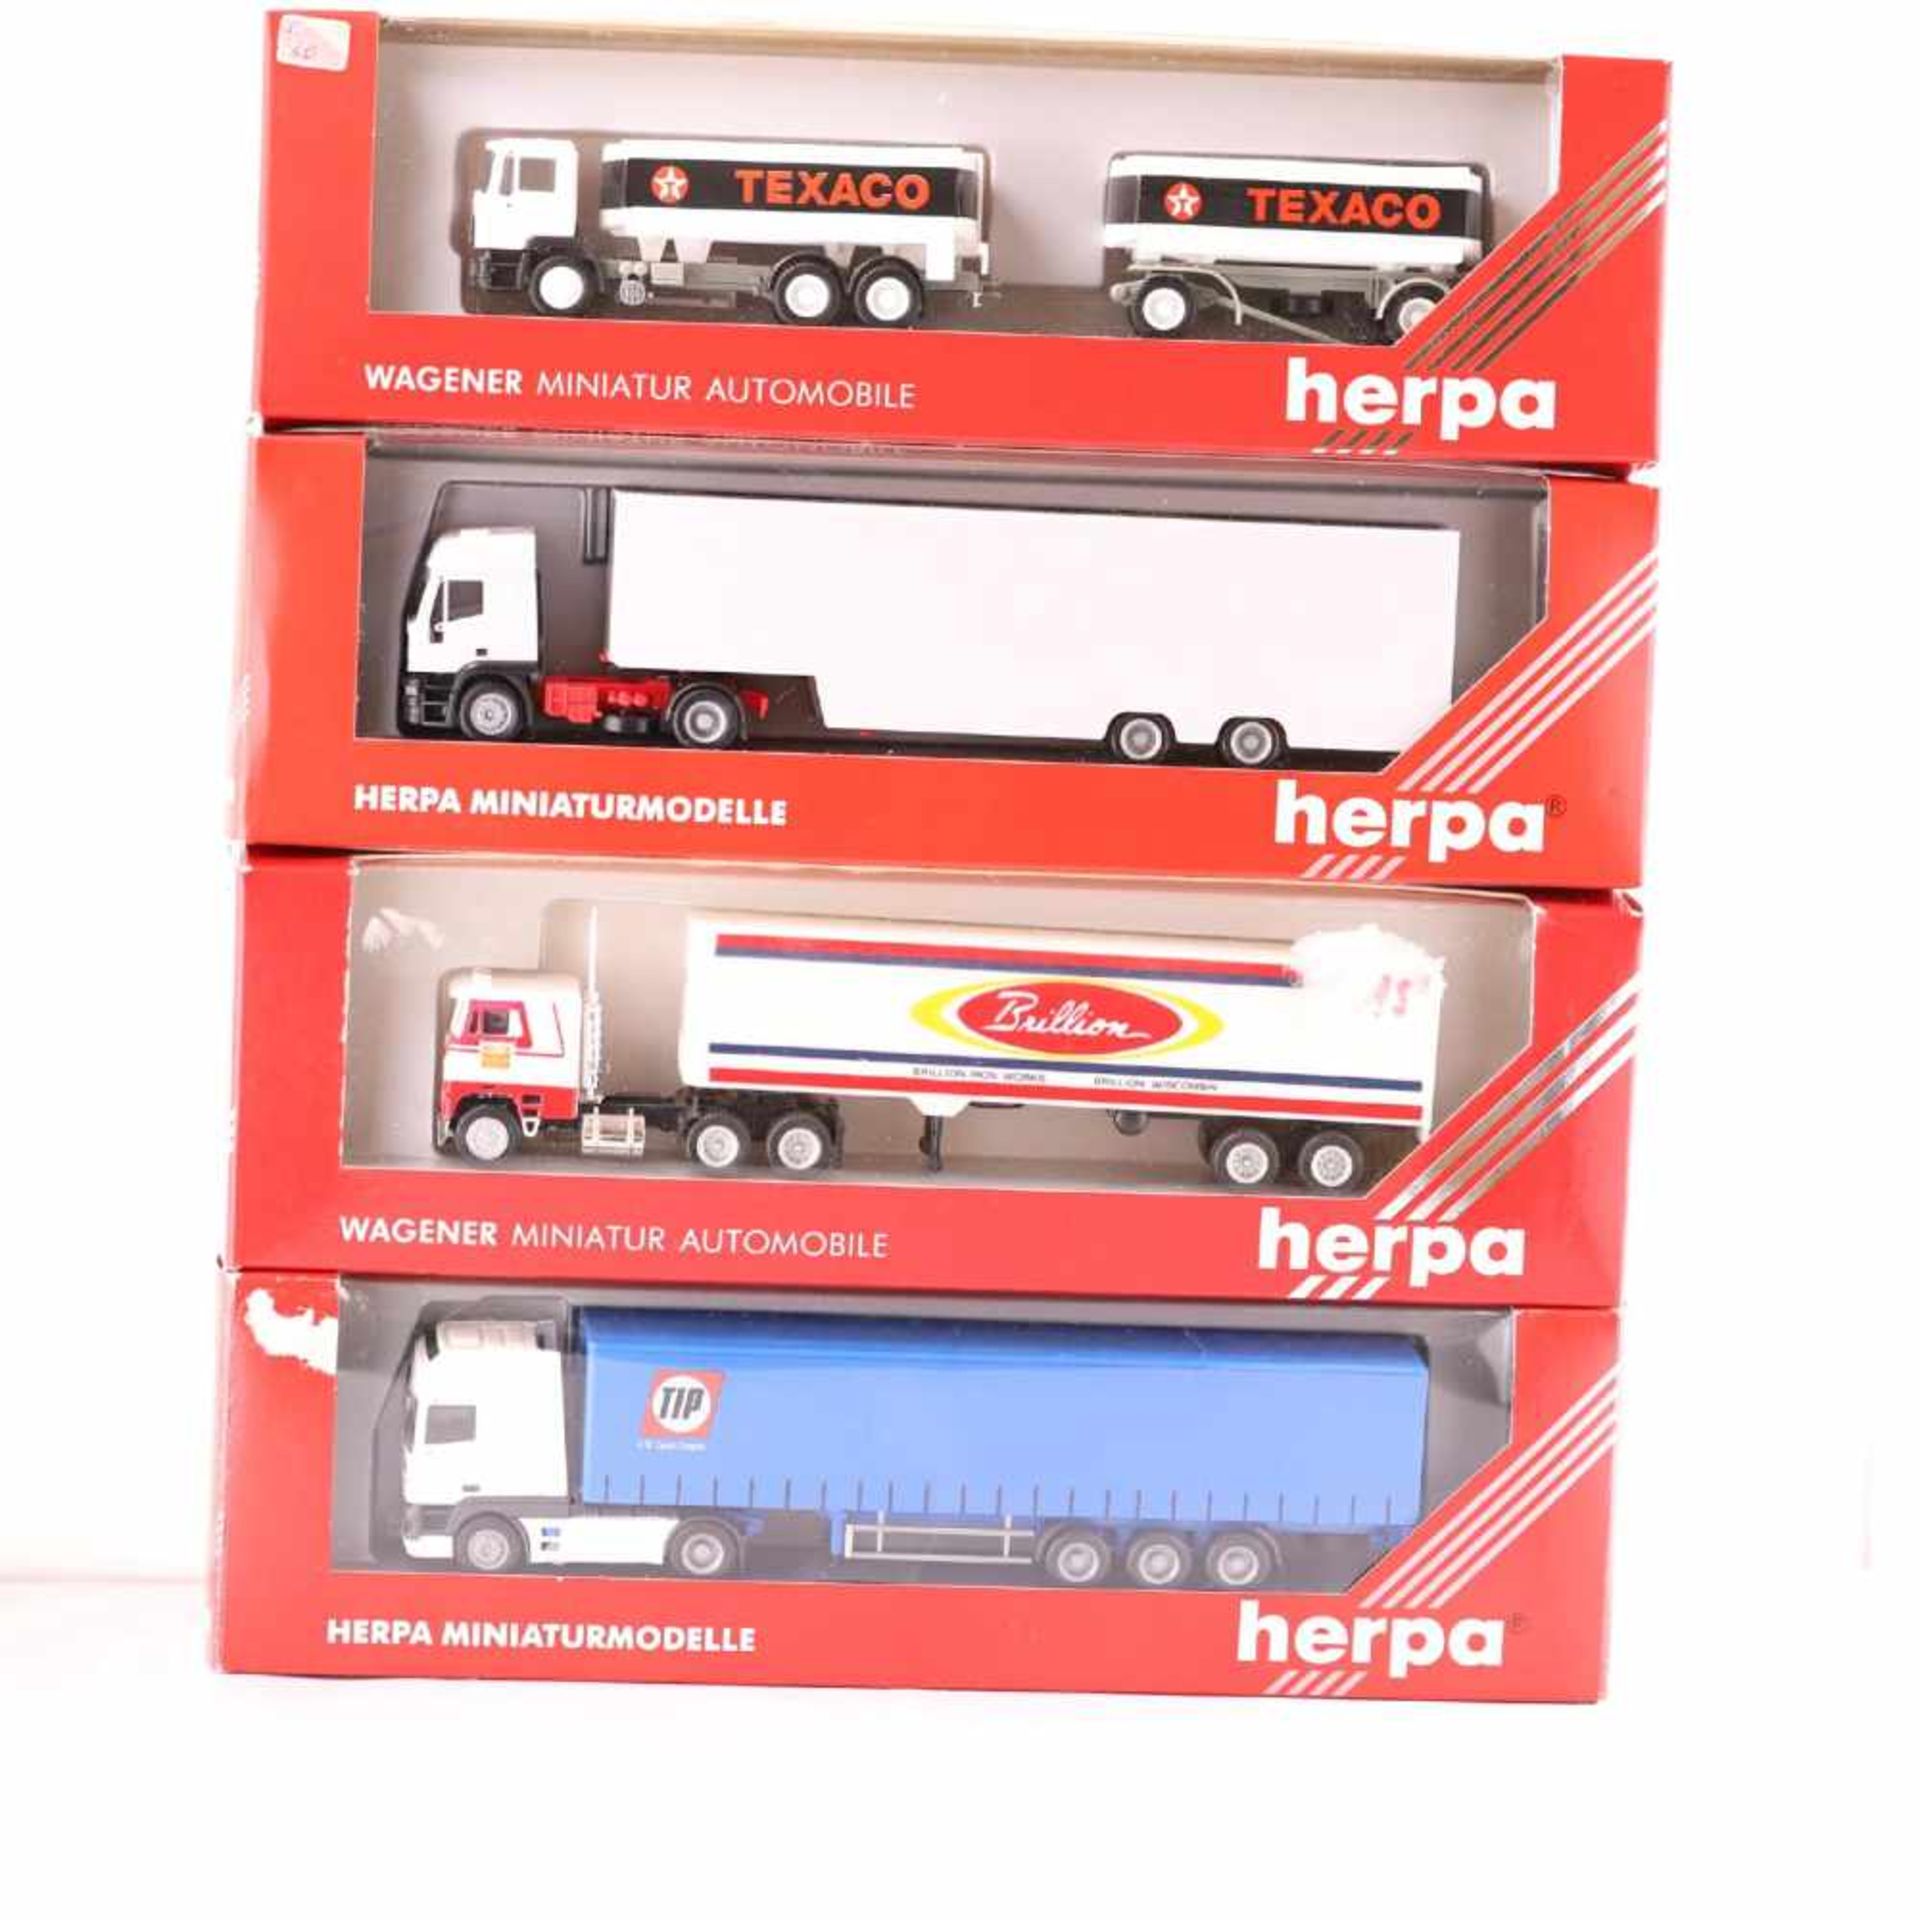 Herpa 4 Teile 864003 MAN F 90 "TEXACO", 143936 LKW "TIP", 142762 Iveco Sattelzug und854002 LKW